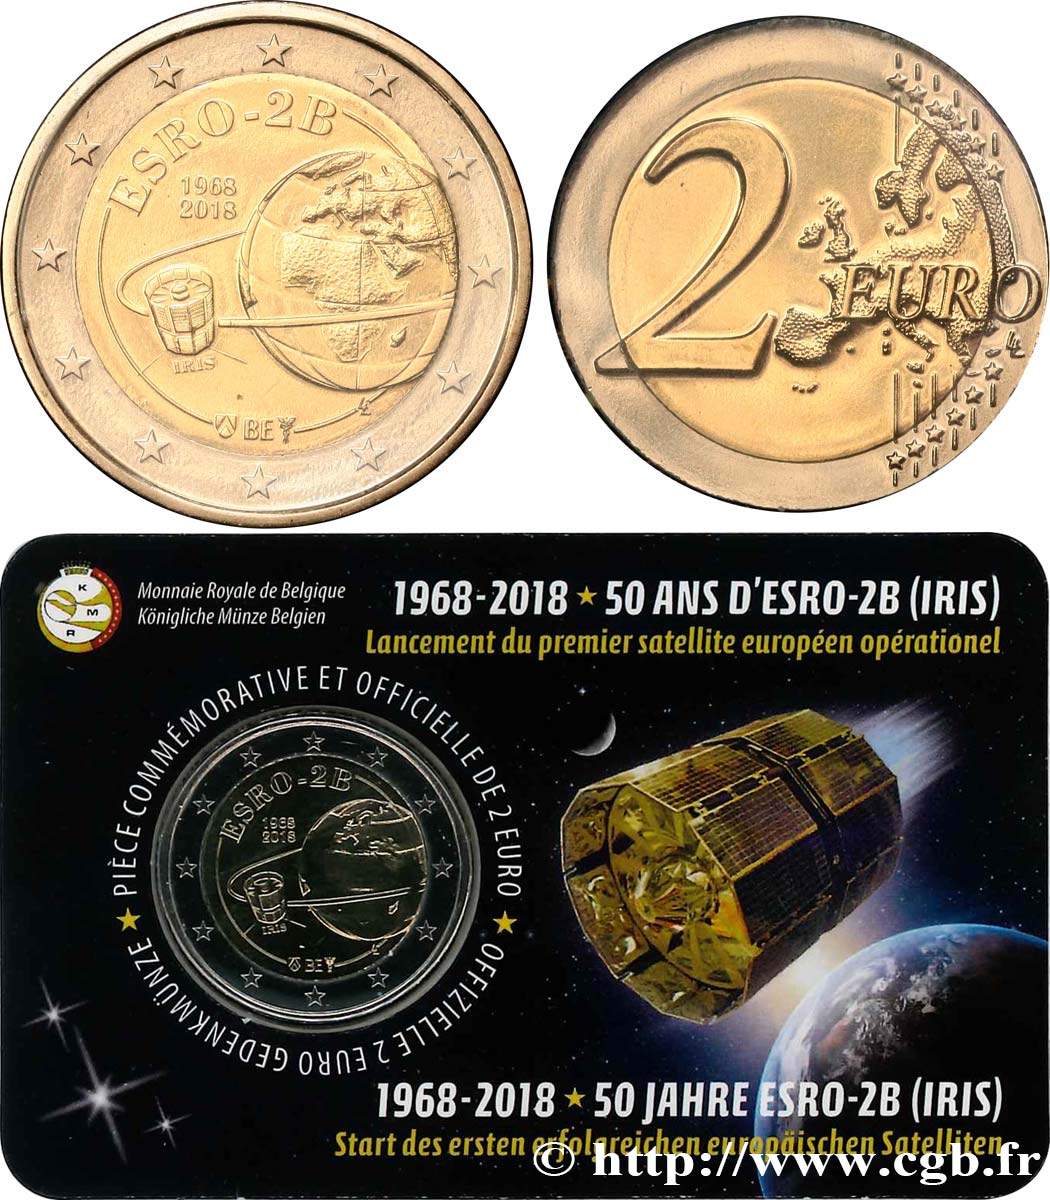 BELGIQUE Coin-card 2 Euro 50 ANS D’ESRO-2B (IRIS) - Version française 2018 FDC